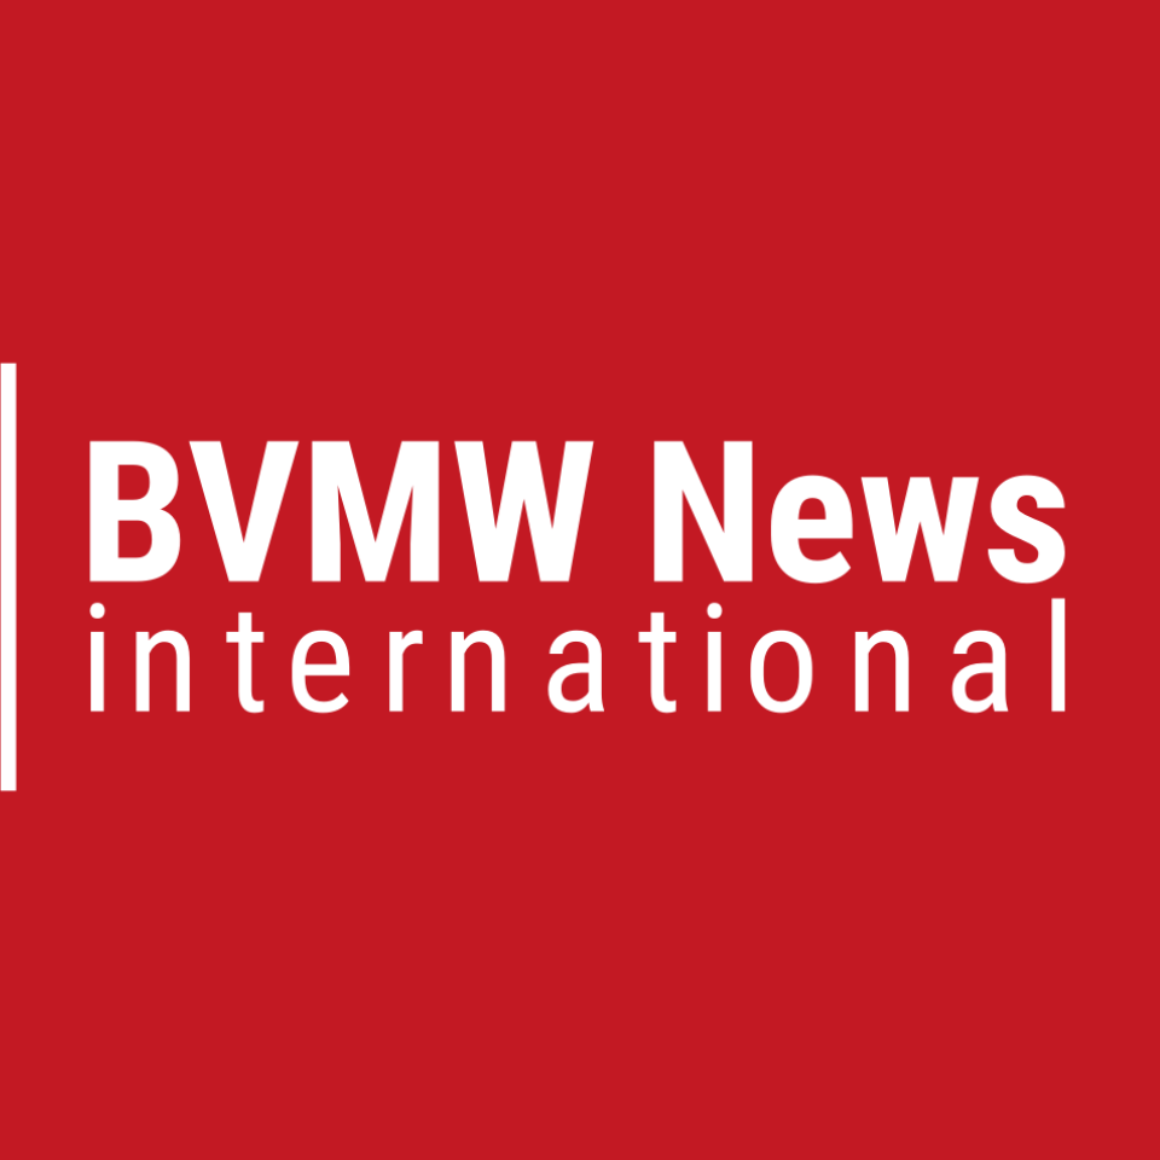 BVMW International